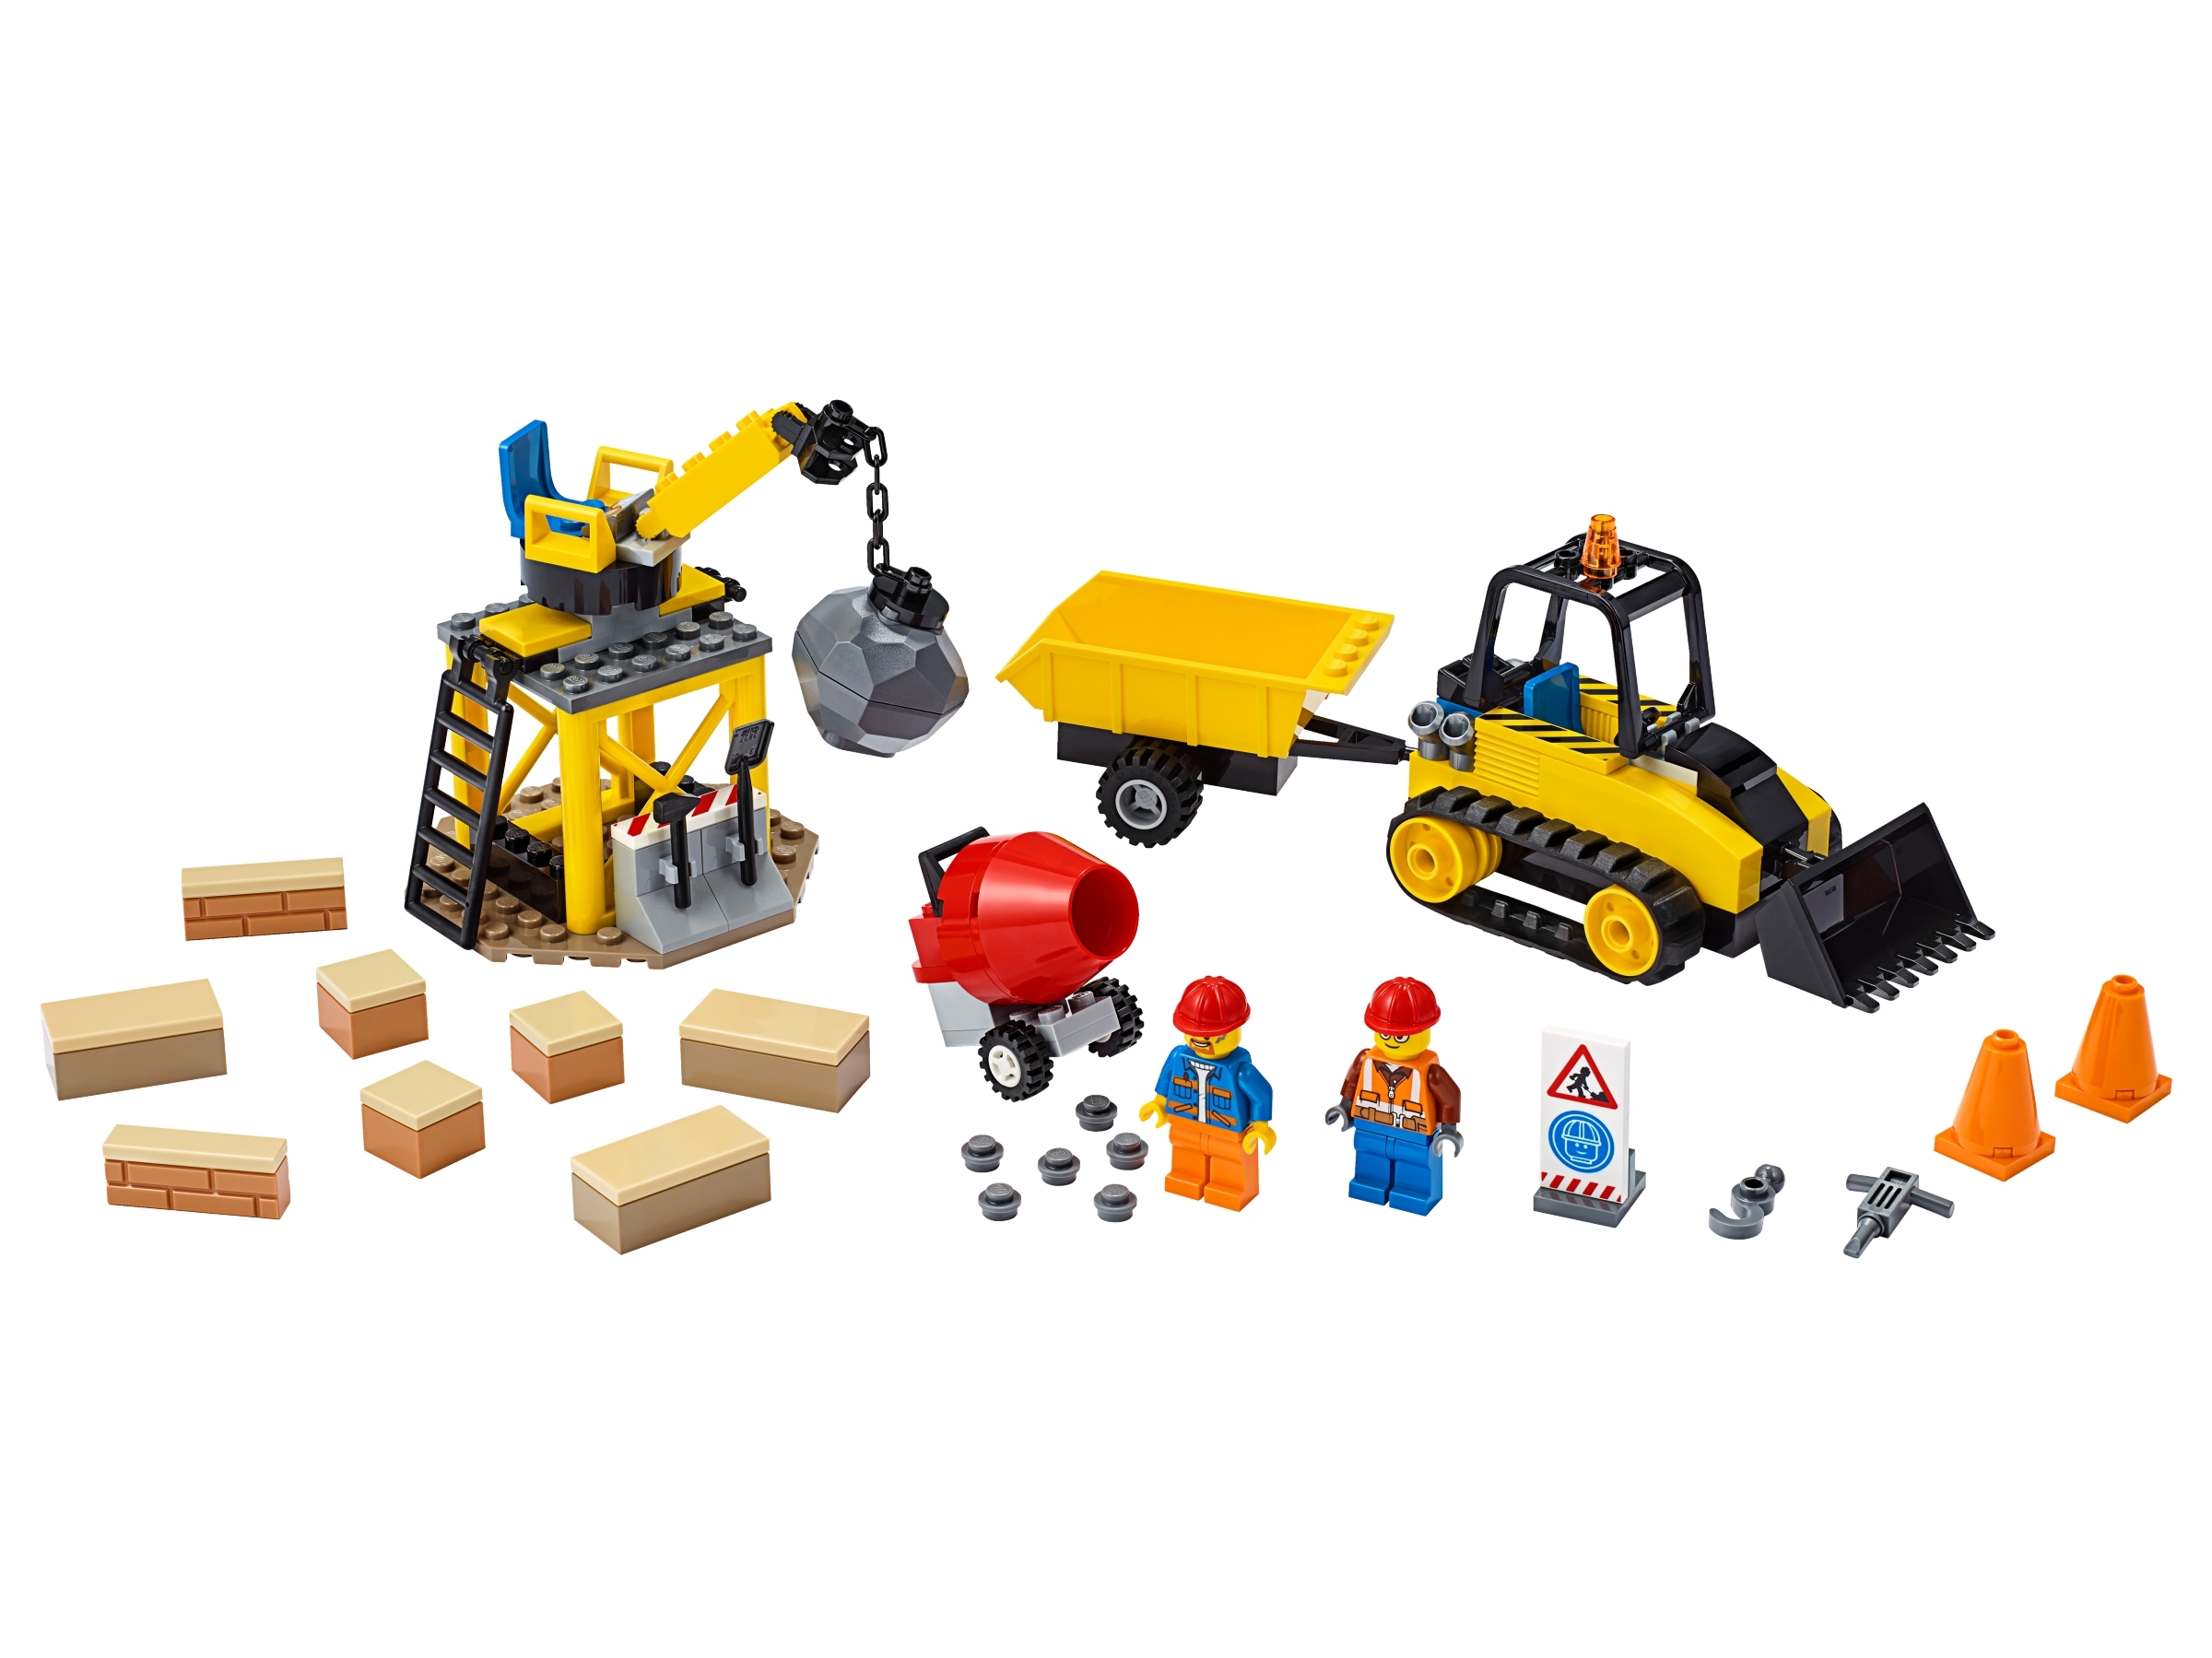 Klocki LEGO 60252 - Buldożer budowlany CITY LEGO